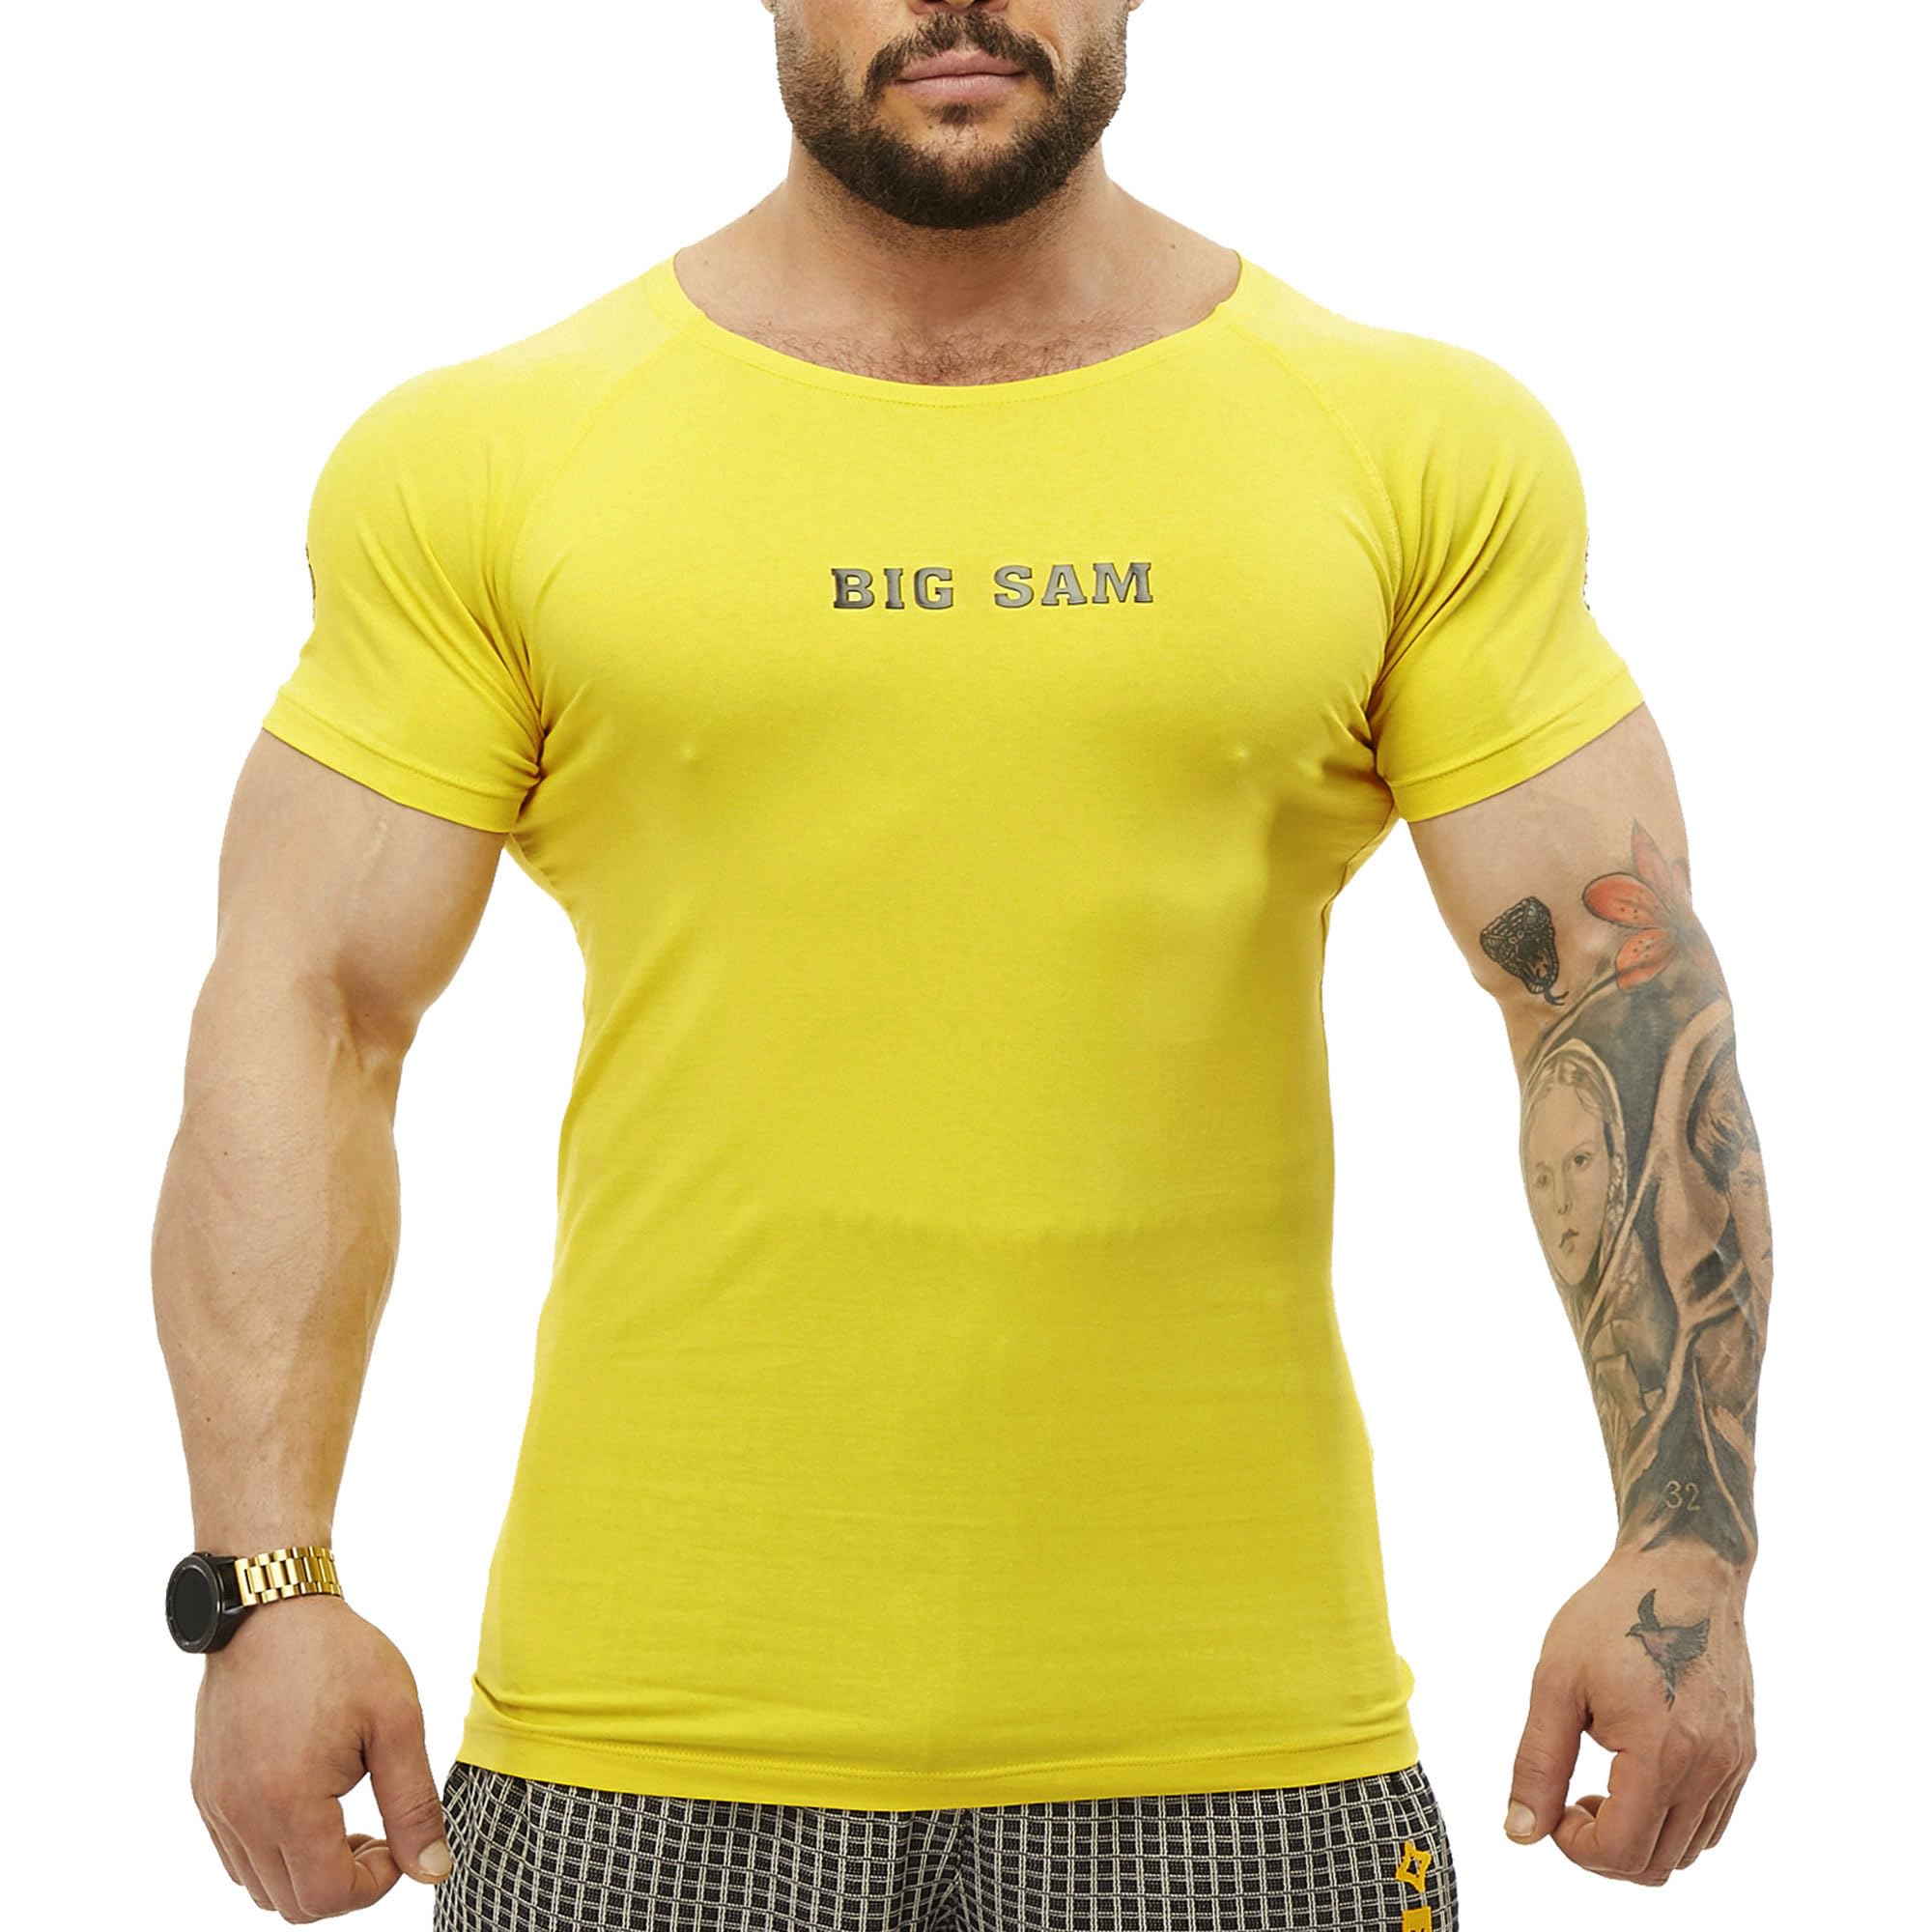 BIG SM EXTREME SPORTSWEAR Herren Shirt T-Shirt Stretch Shirt Bodybuilding Gym Gym 2570 gelb XL